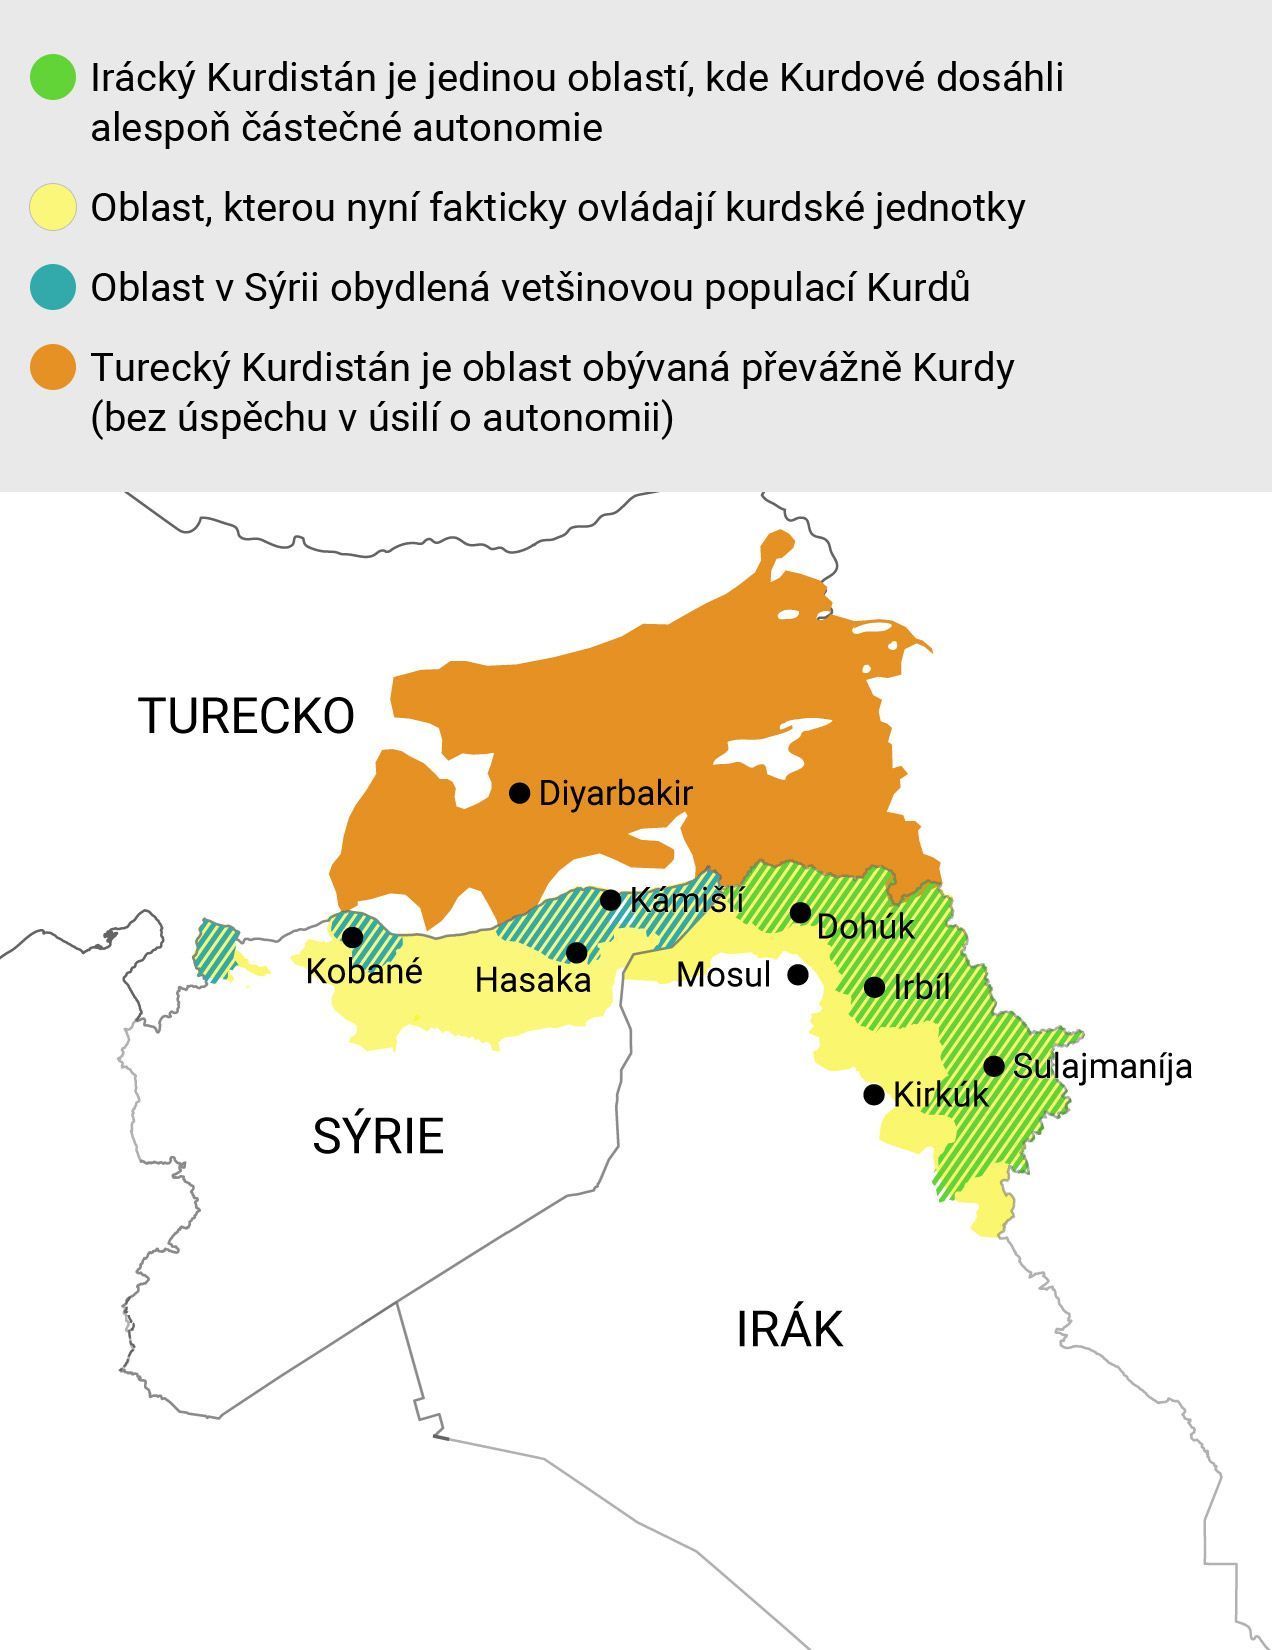 Kurdové v Turecku, Iráku a Sýrii